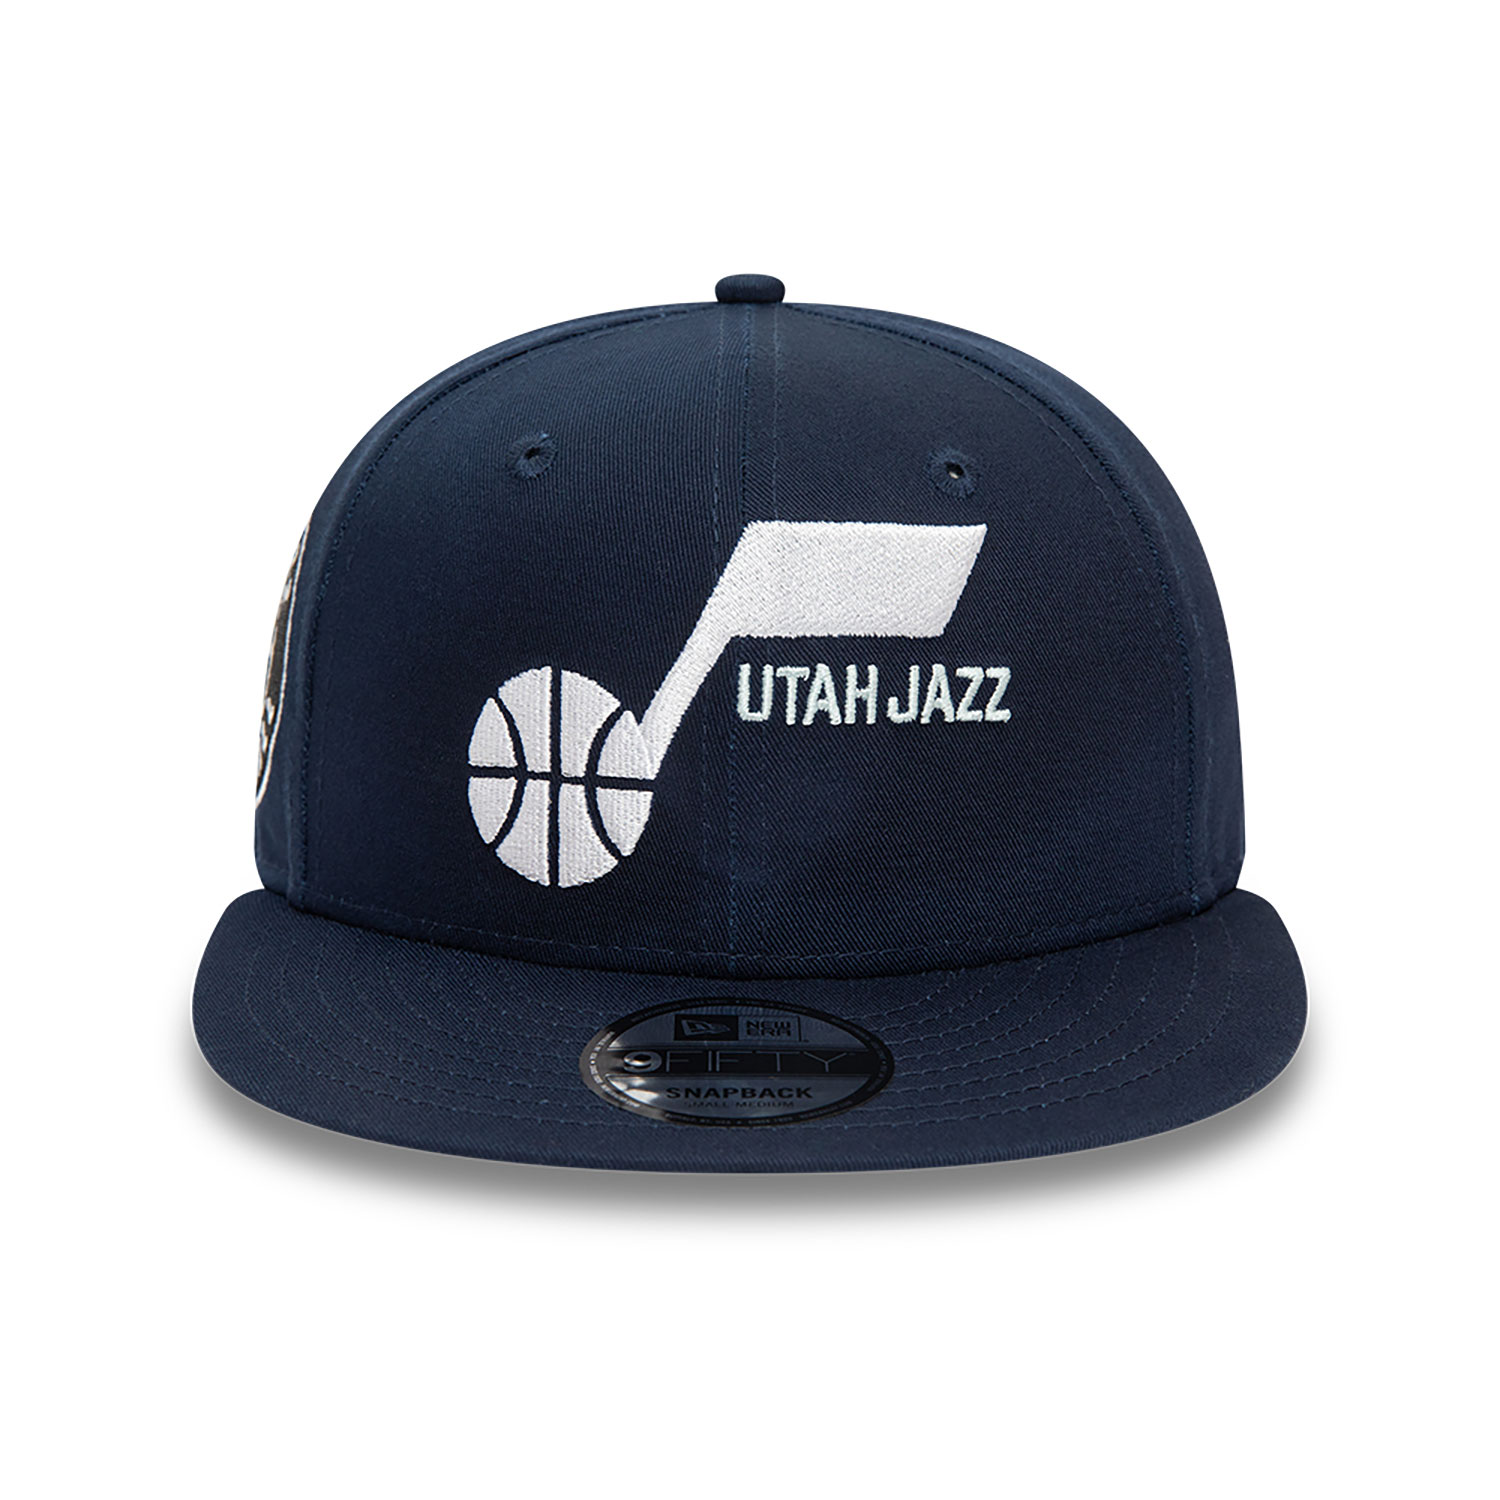 Utah Jazz NBA Patch Dark Blue 9FIFTY Snapback Cap